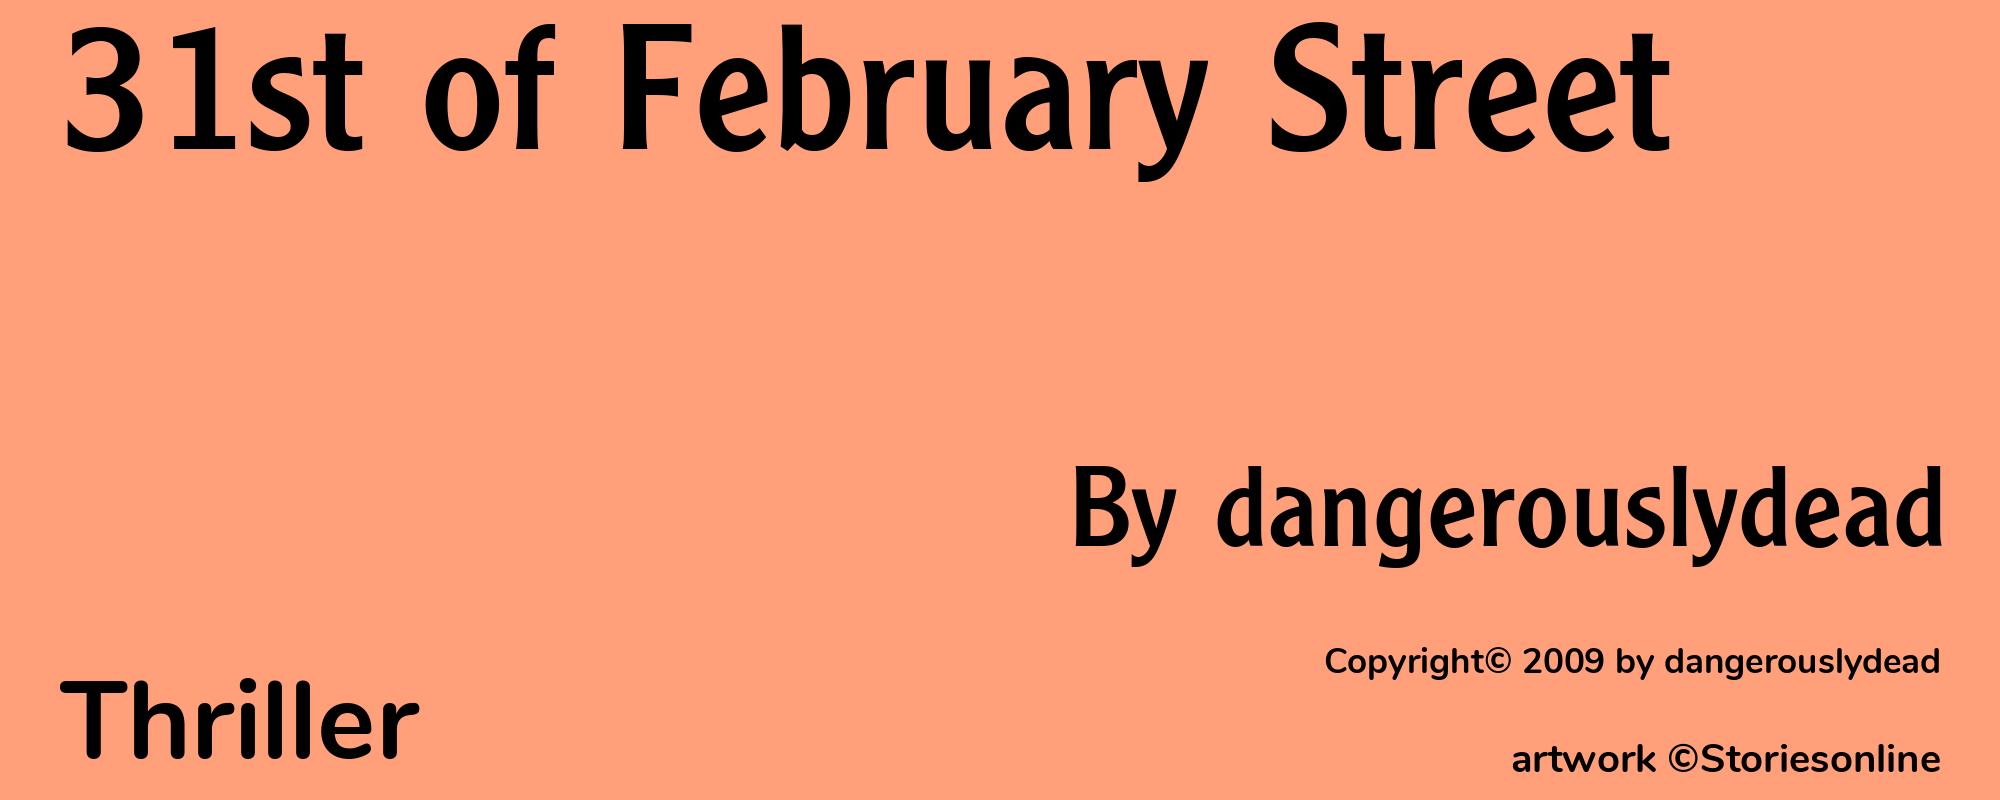 31st of February Street - Cover